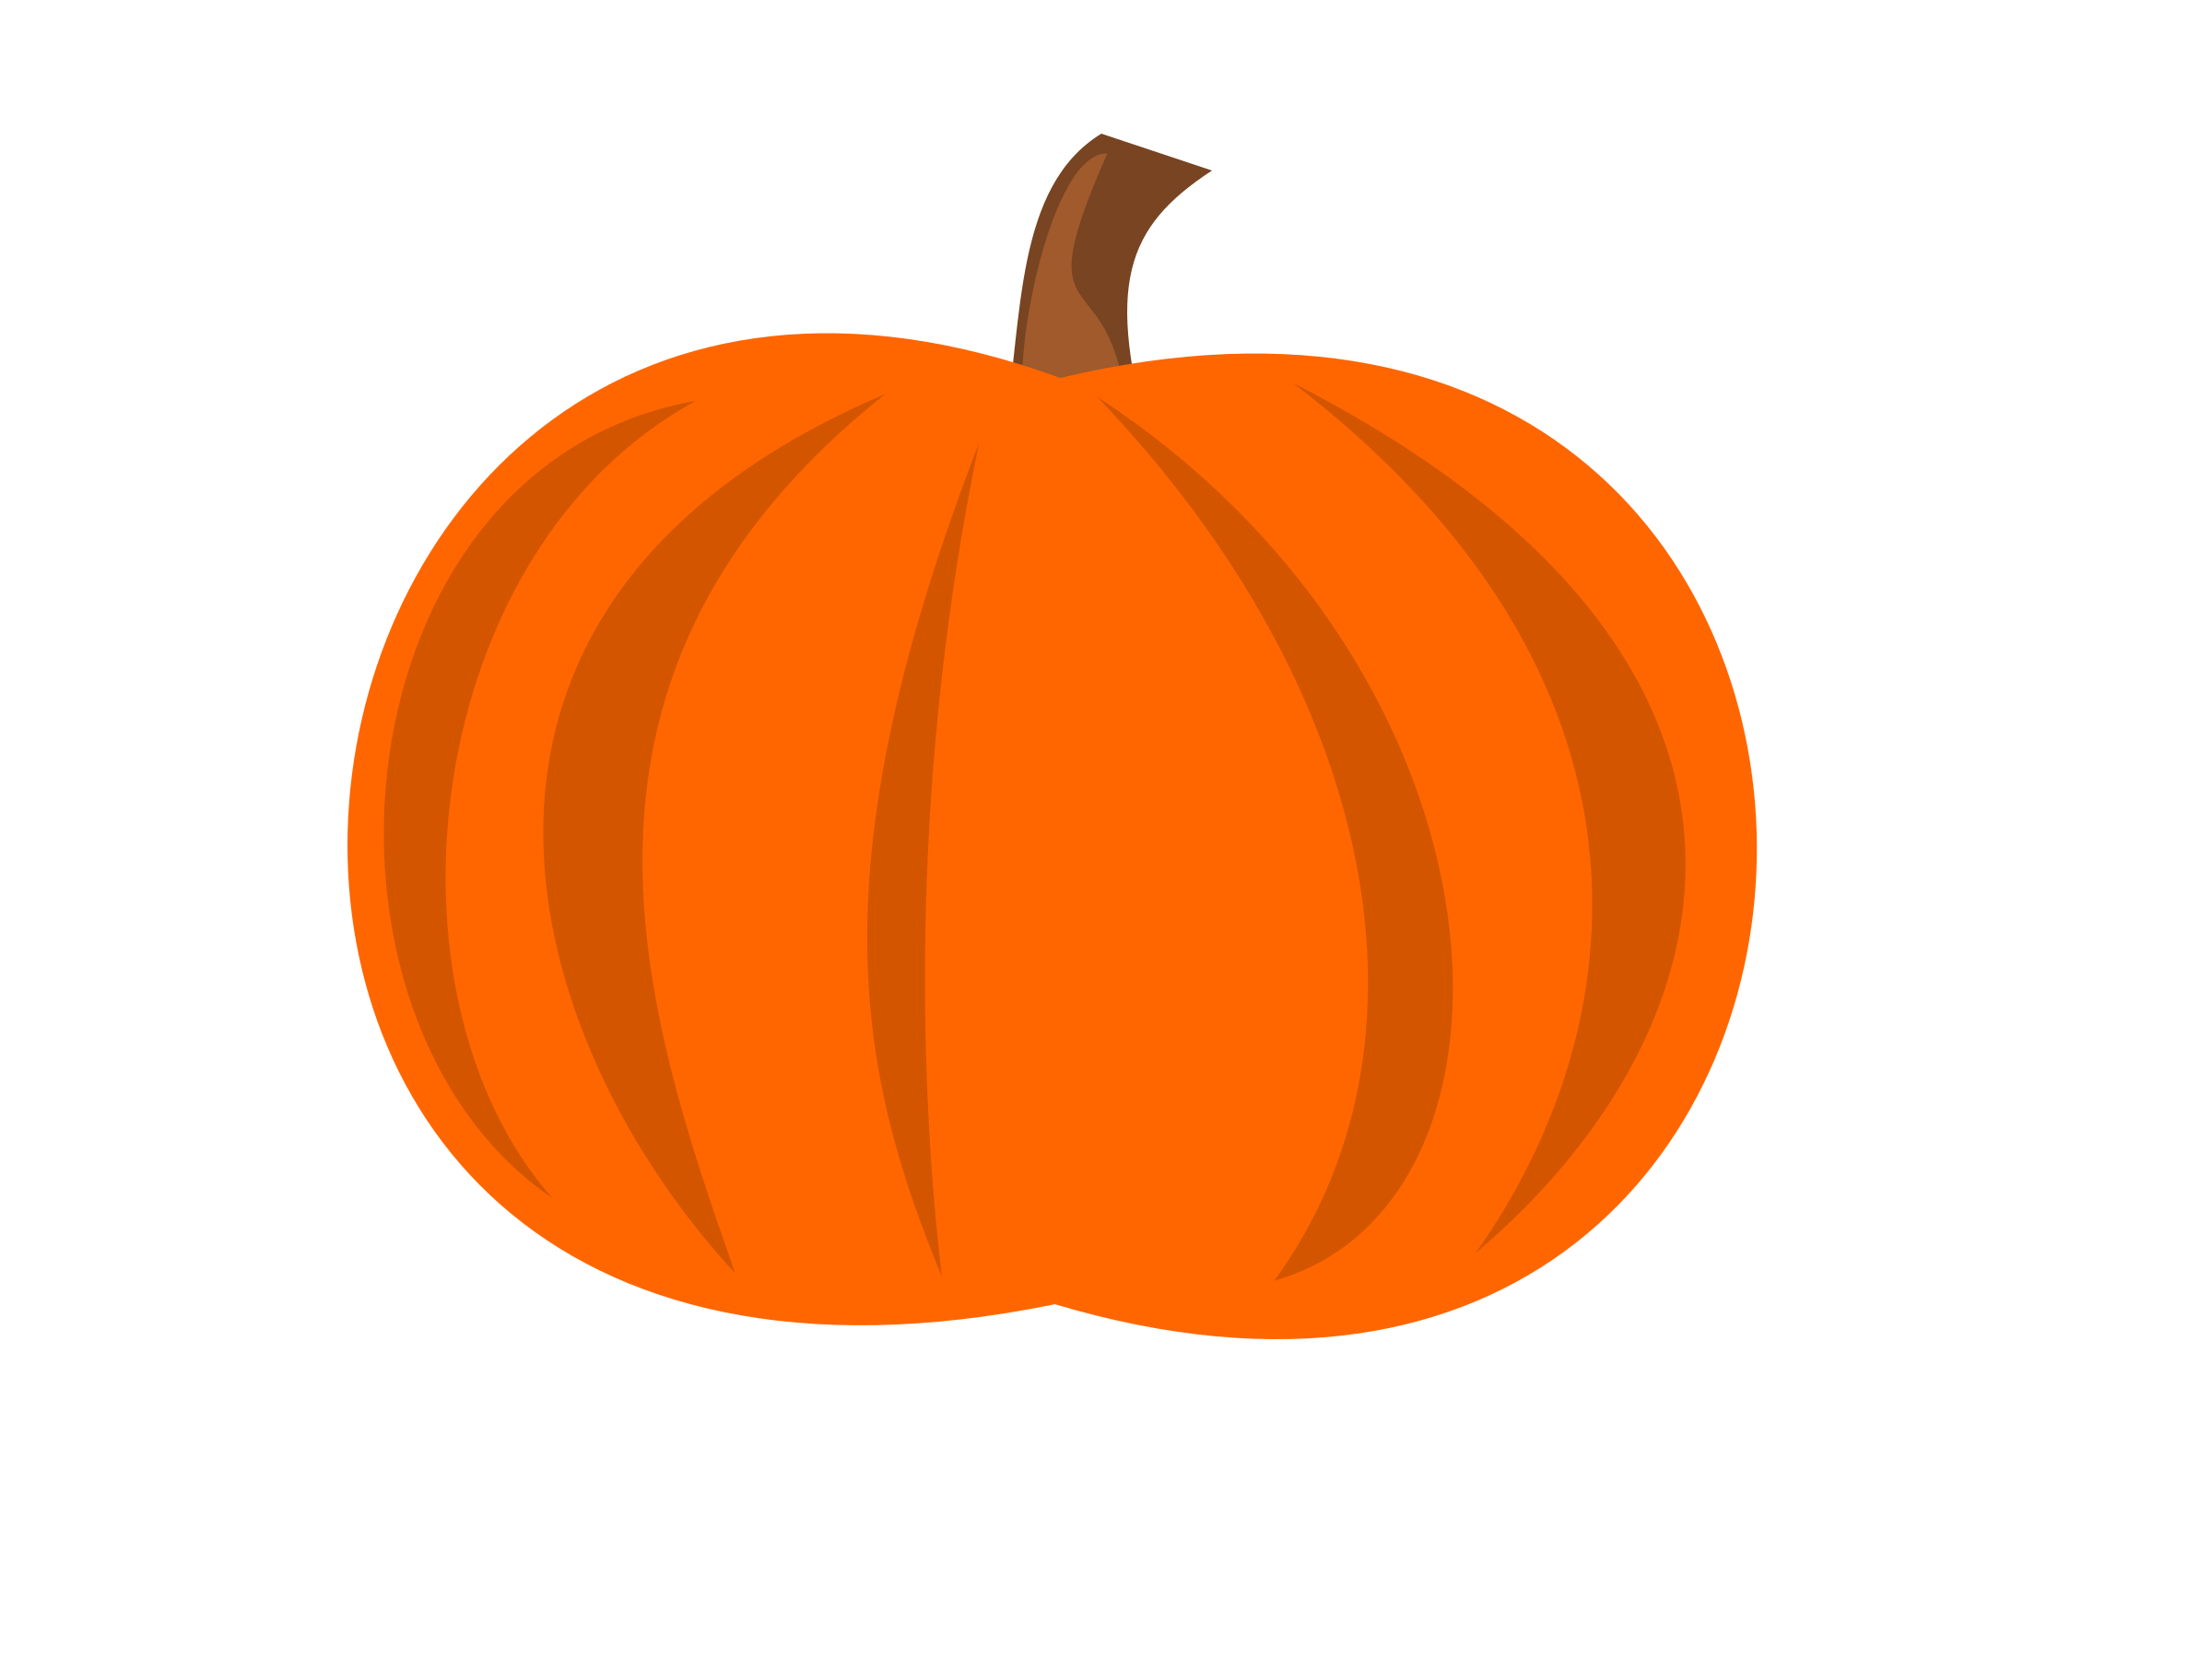 Black pumpkin clipart